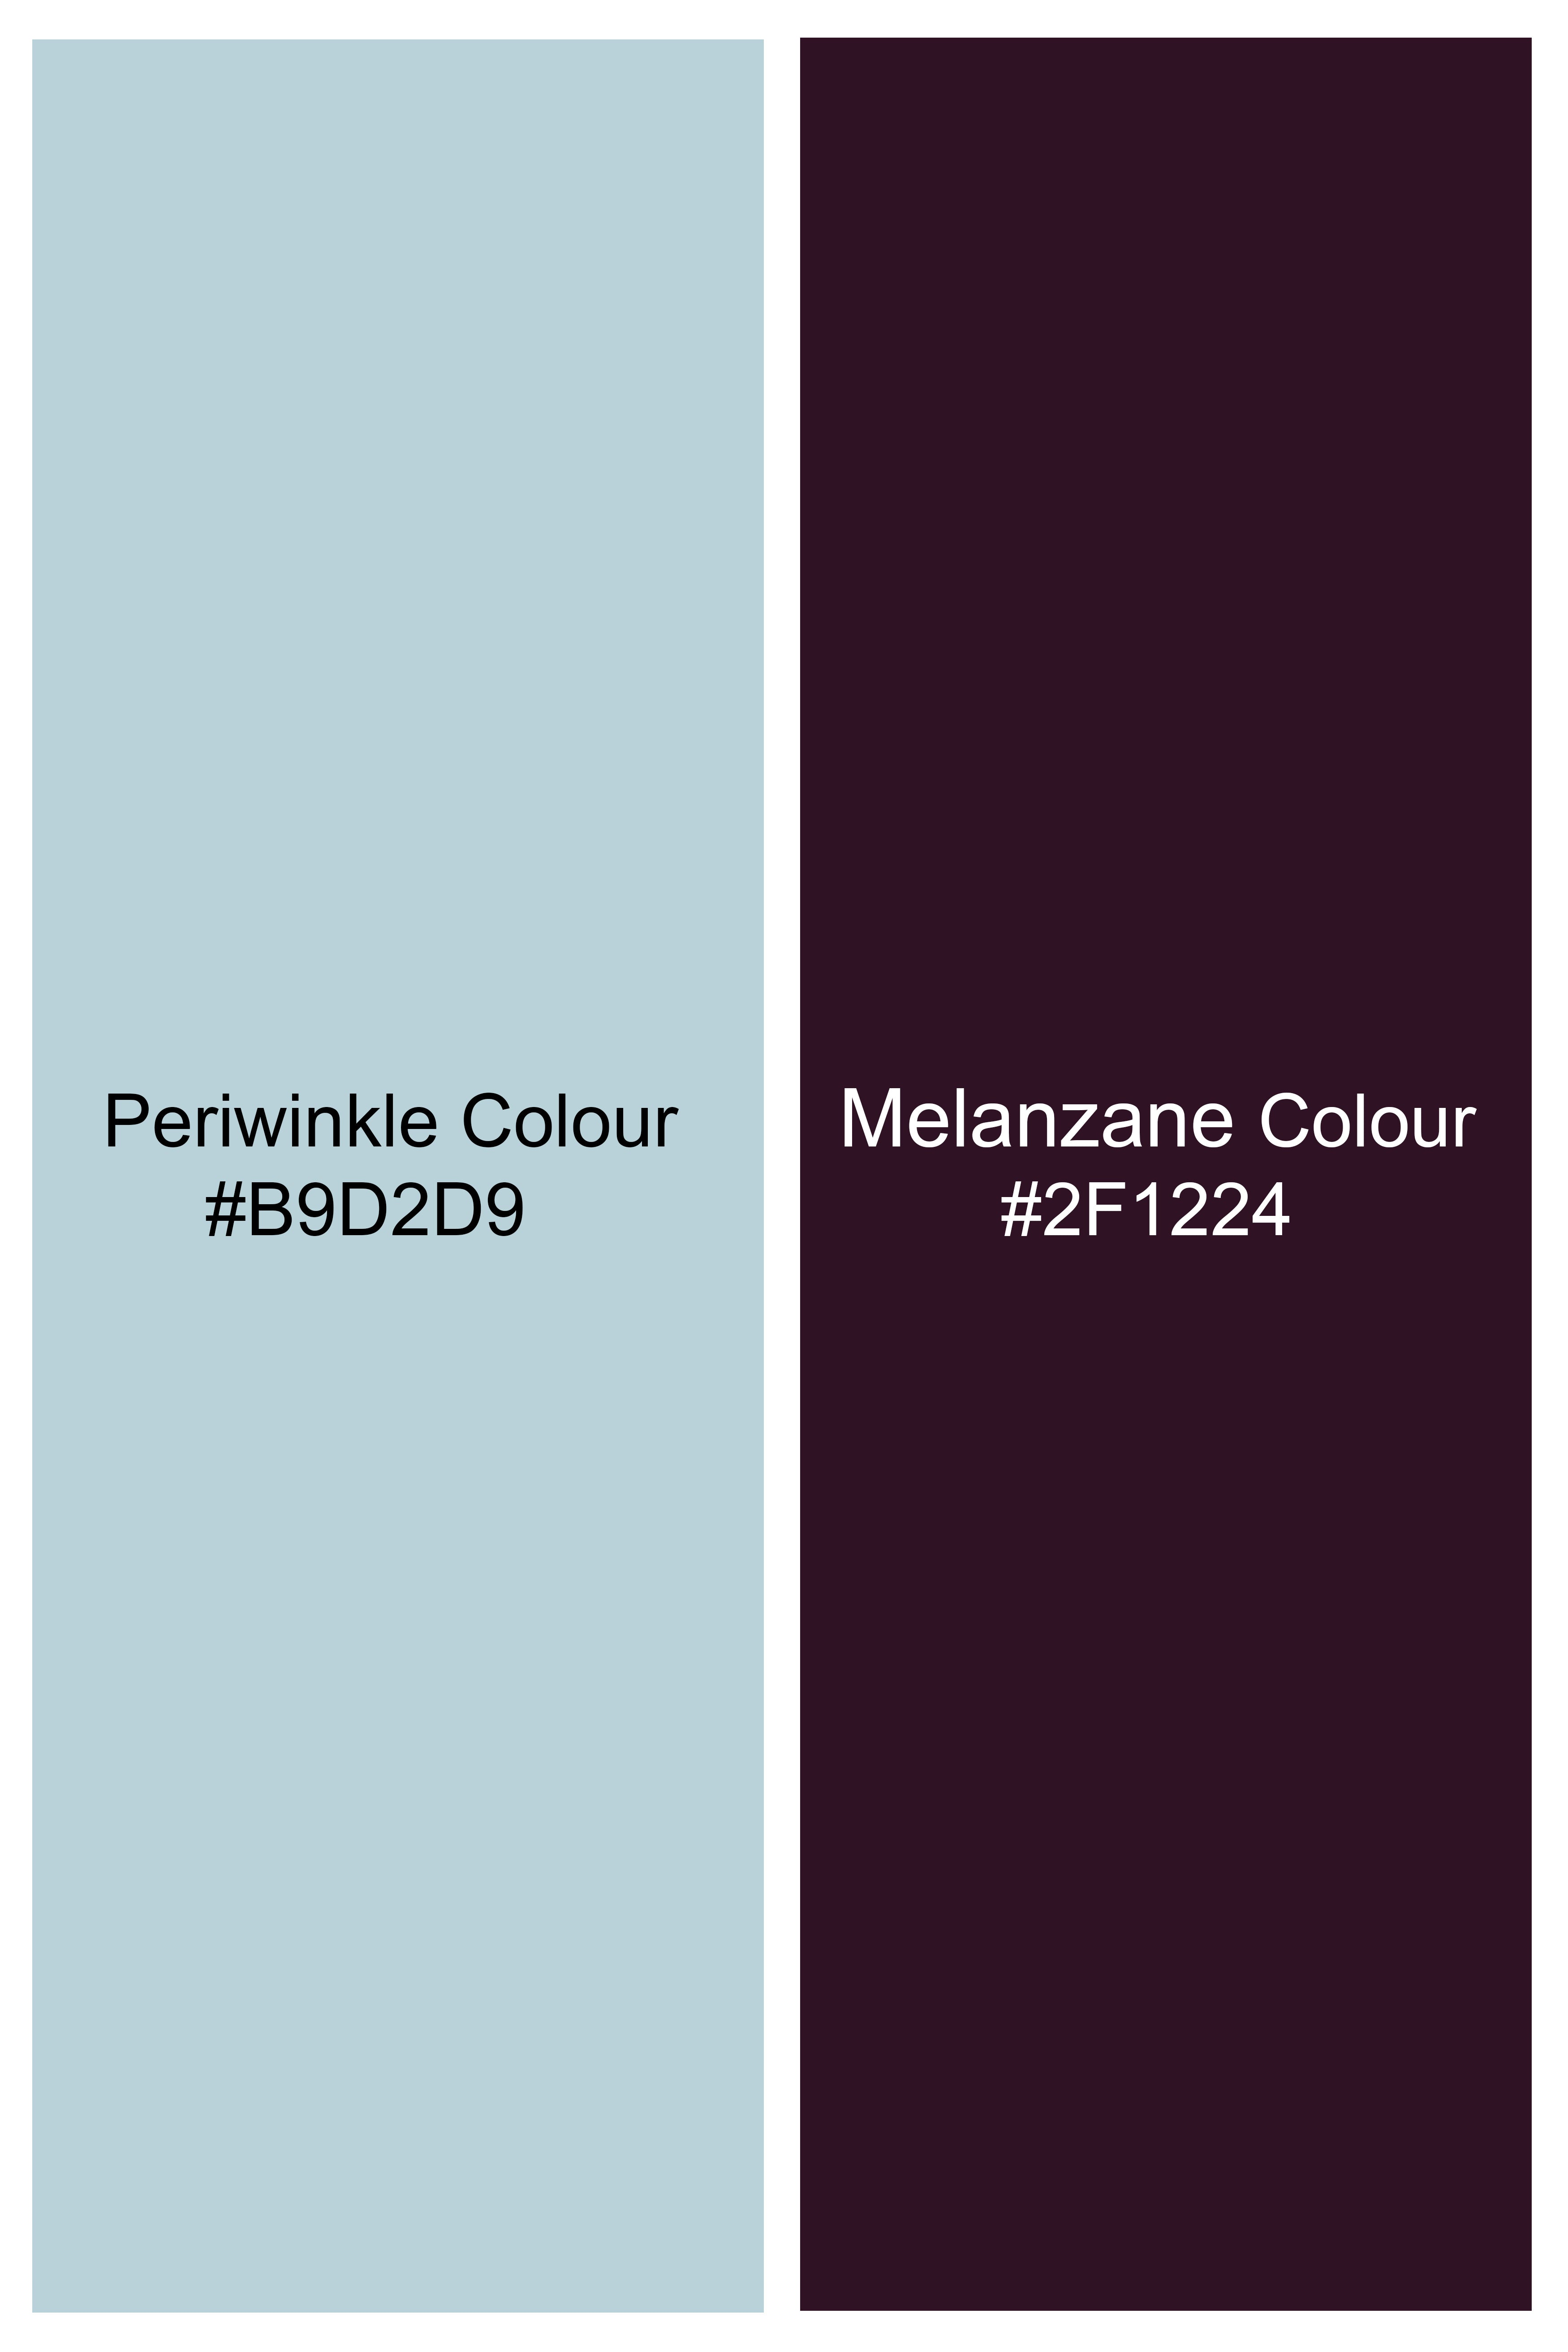 Periwinkle Blue with Melanzane Maroon Flower Printed Super Soft Premium Cotton Shirt